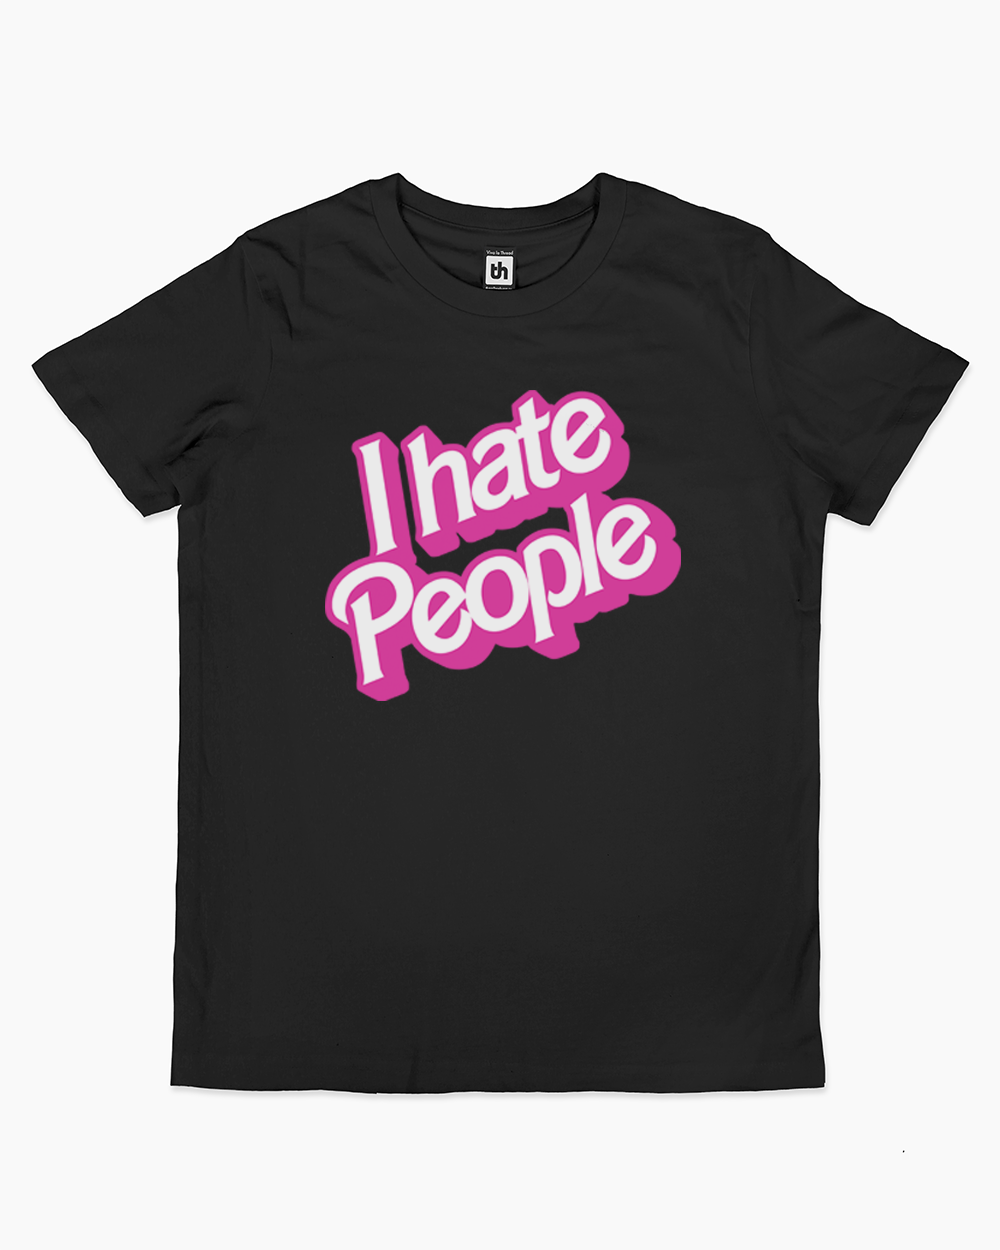 I Hate People Kids T-Shirt Black